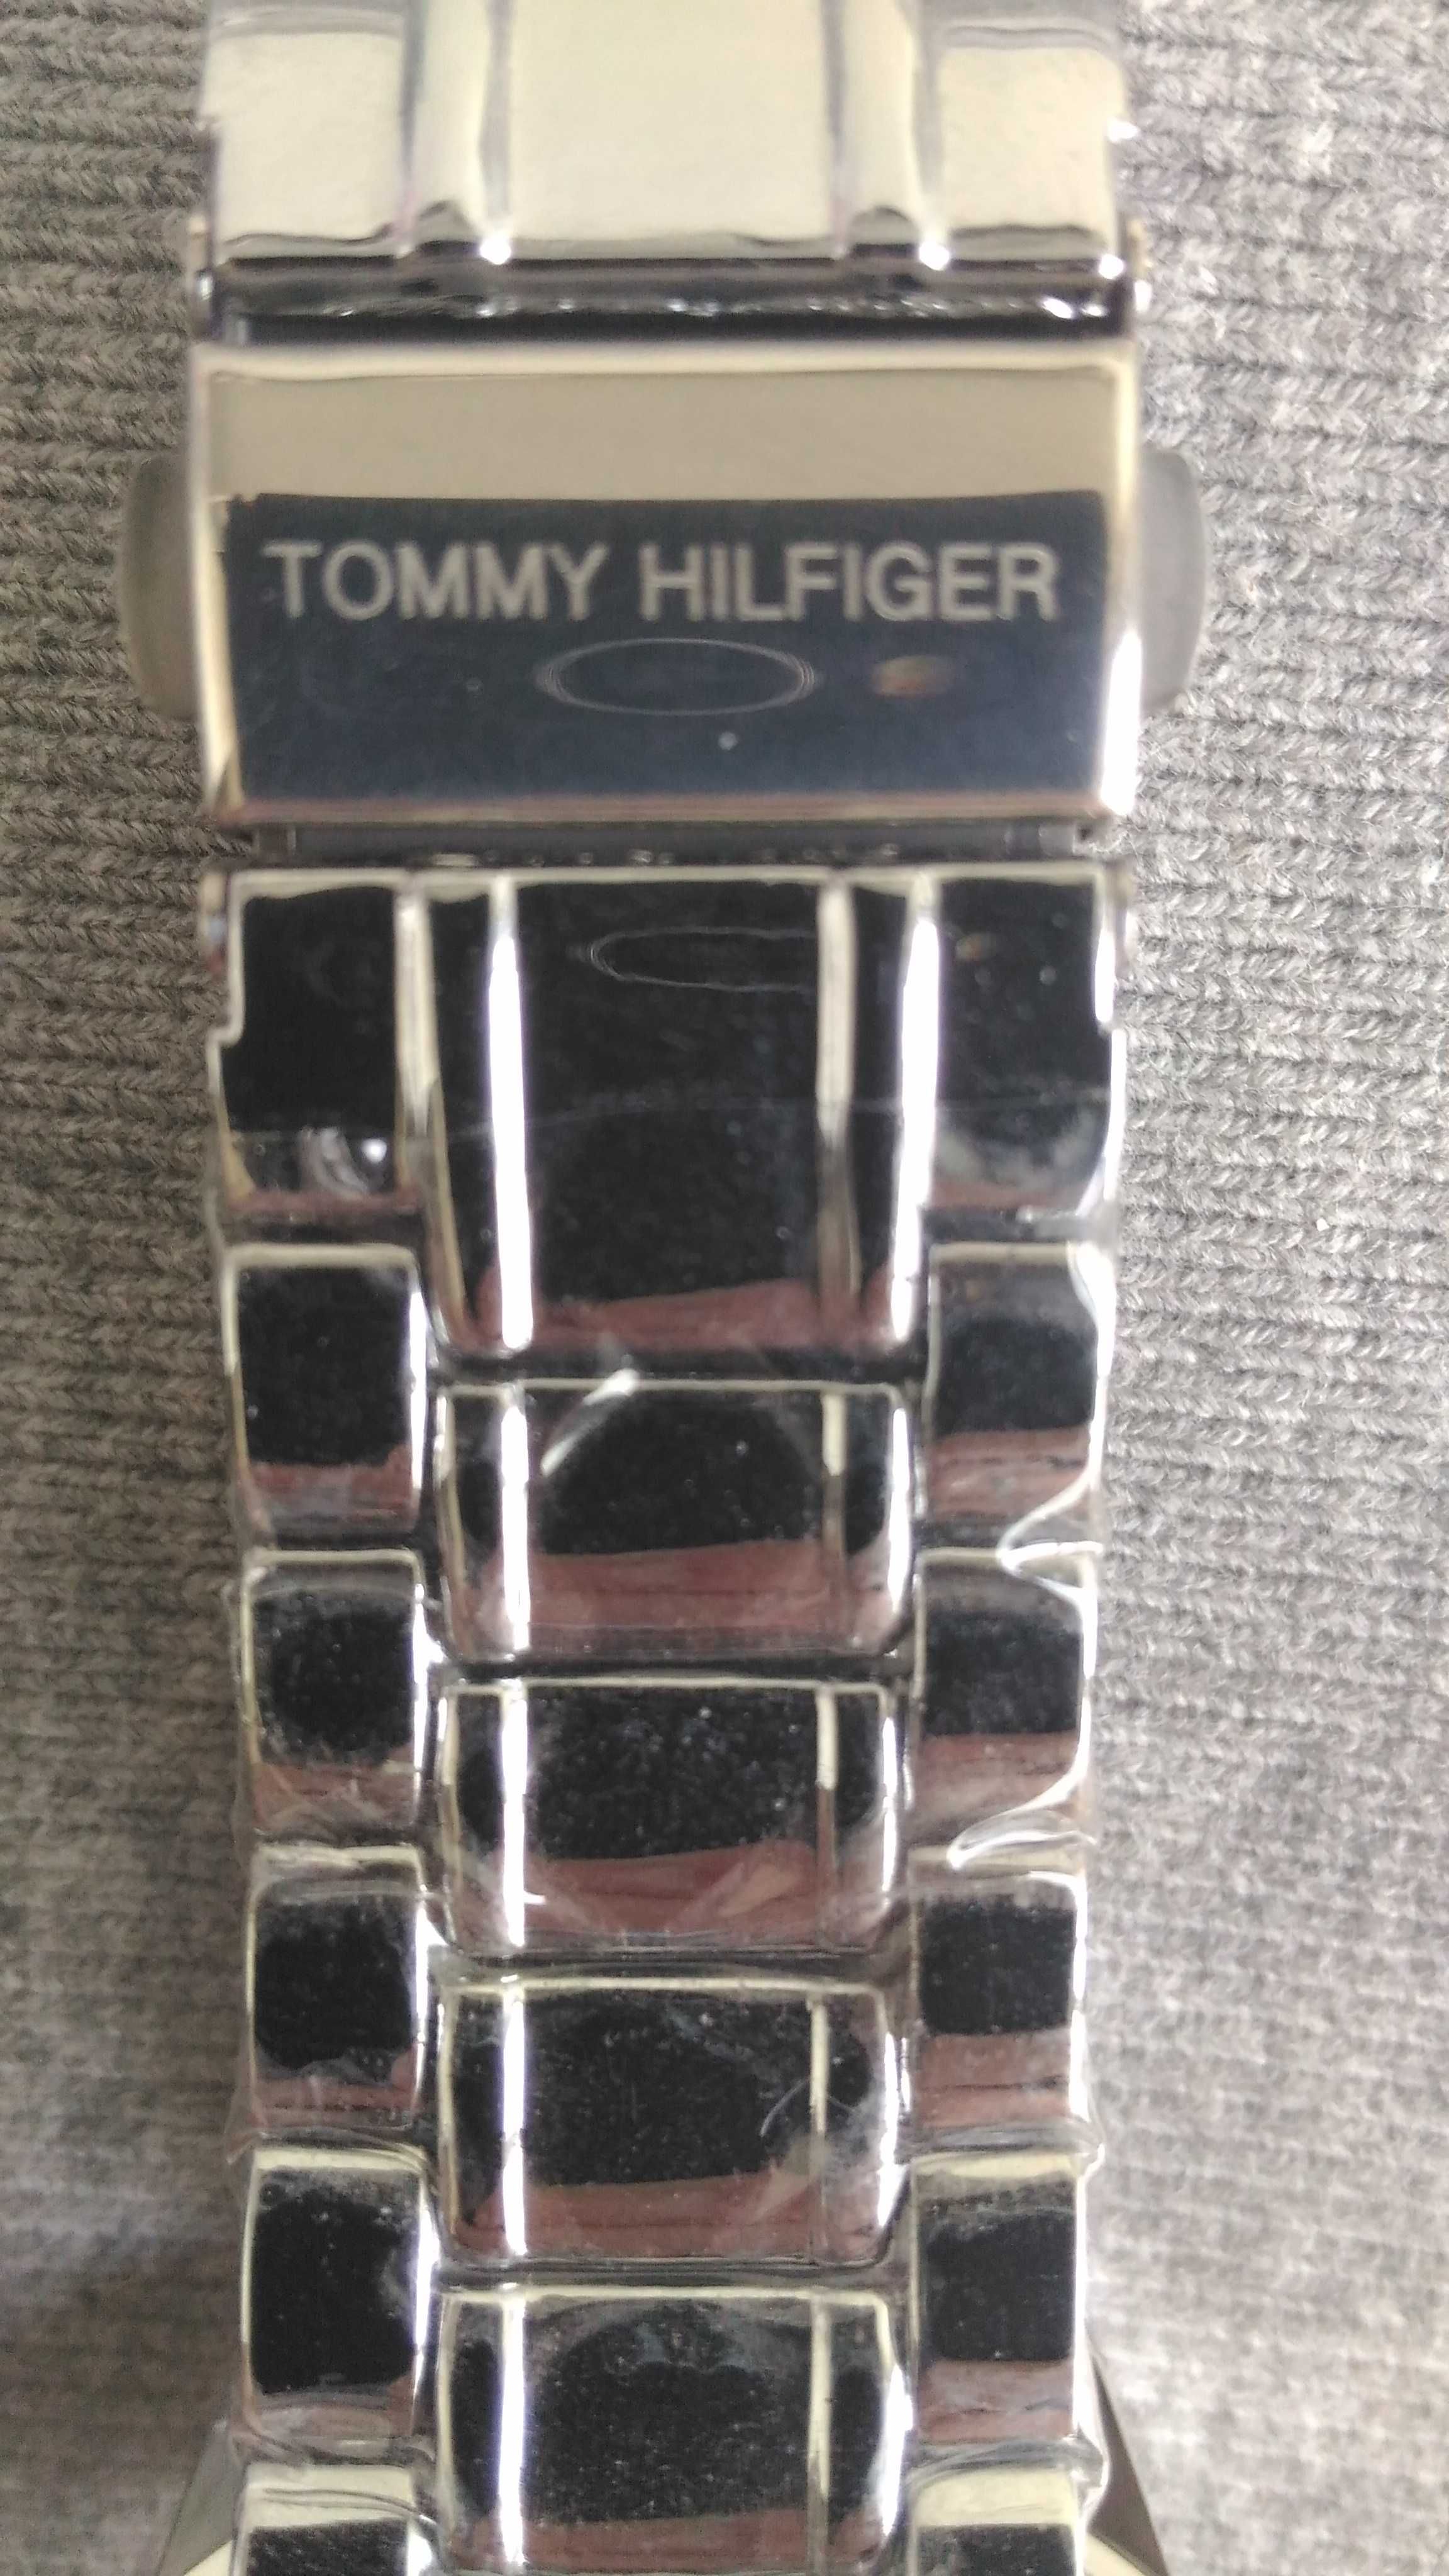 Мужские часы Tommy Hilfiger